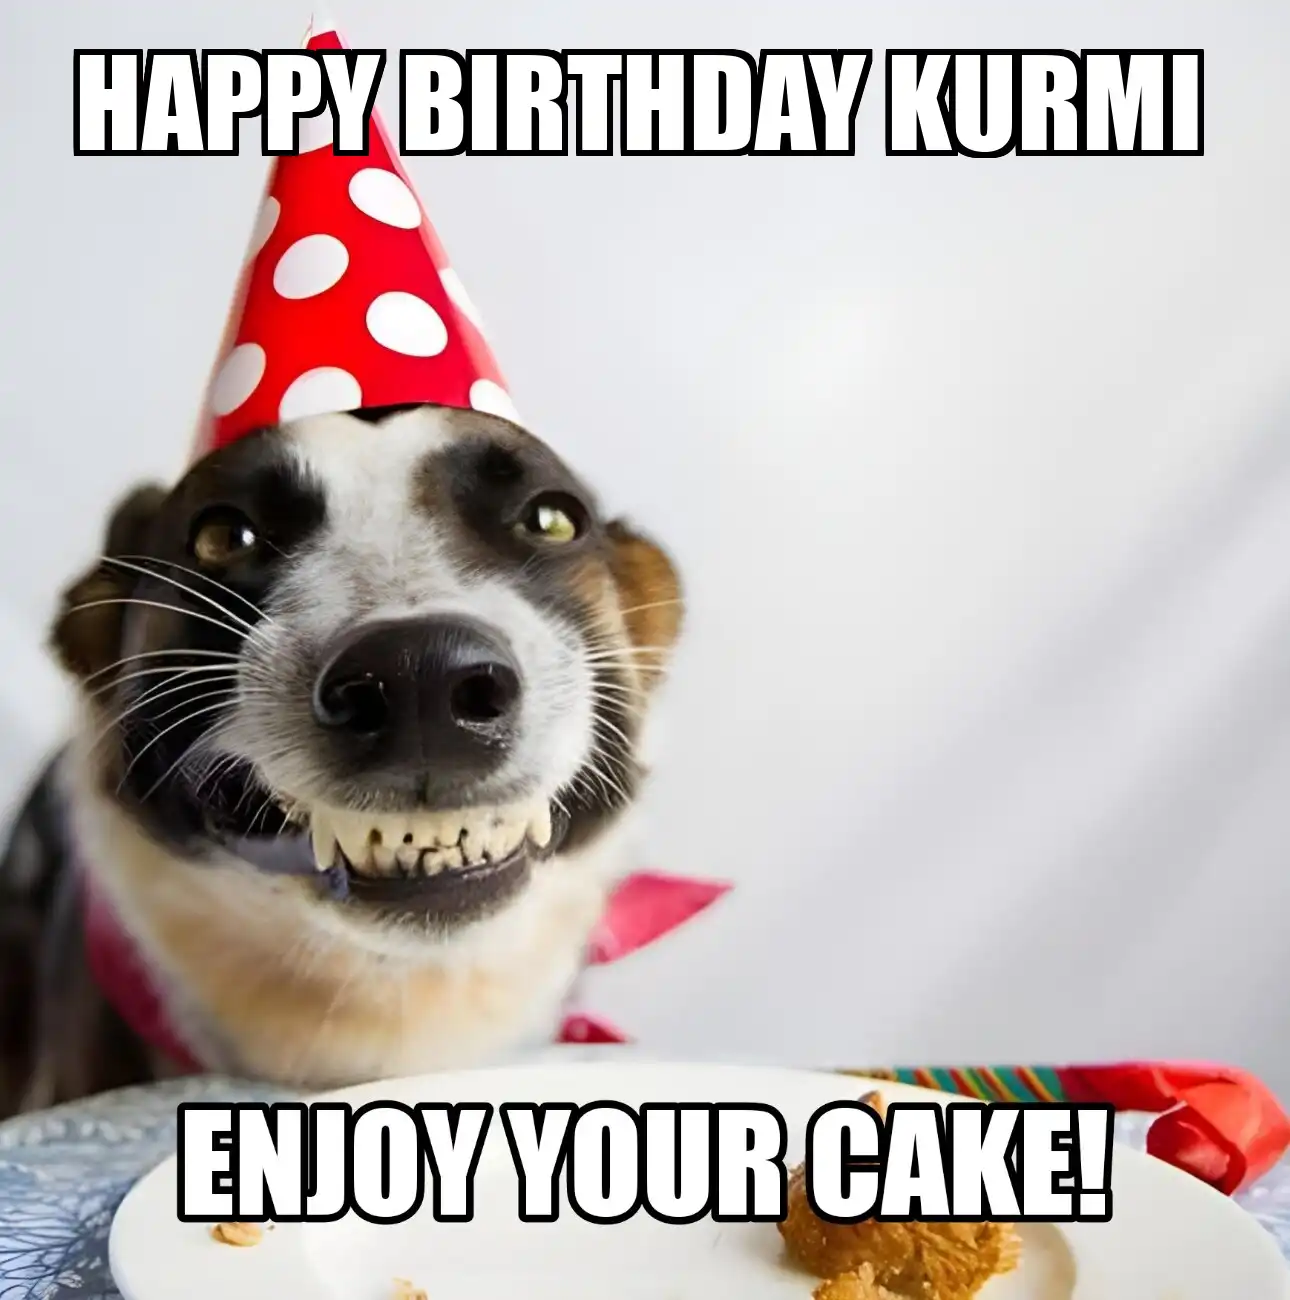 Happy Birthday Kurmi Enjoy Your Cake Dog Meme